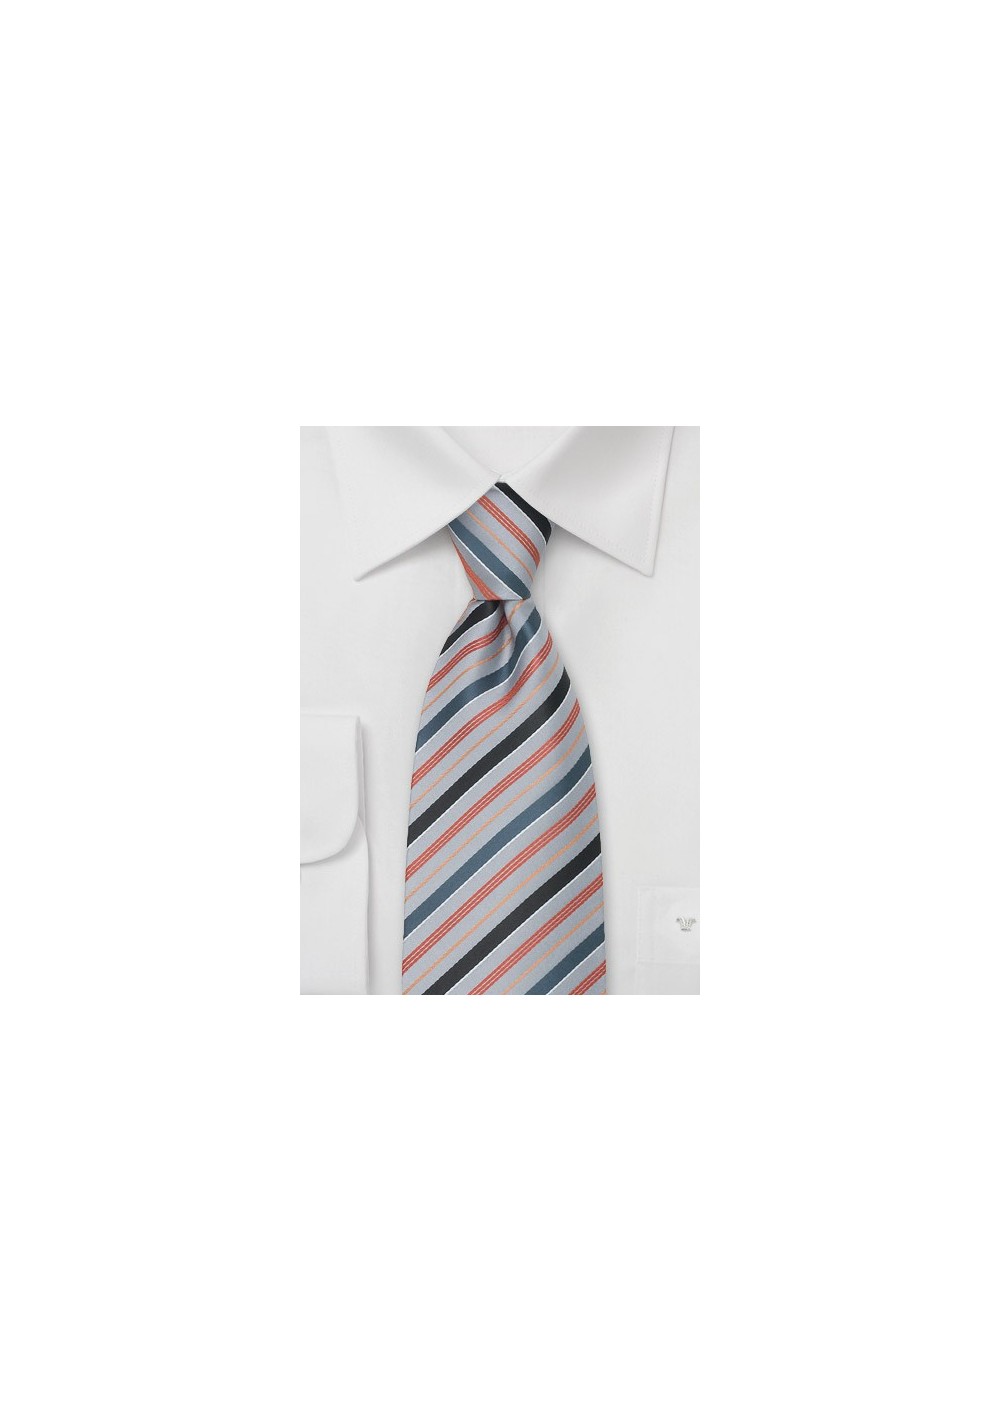 Silver Neckties - Striped Tie In Silver-Periwinkle